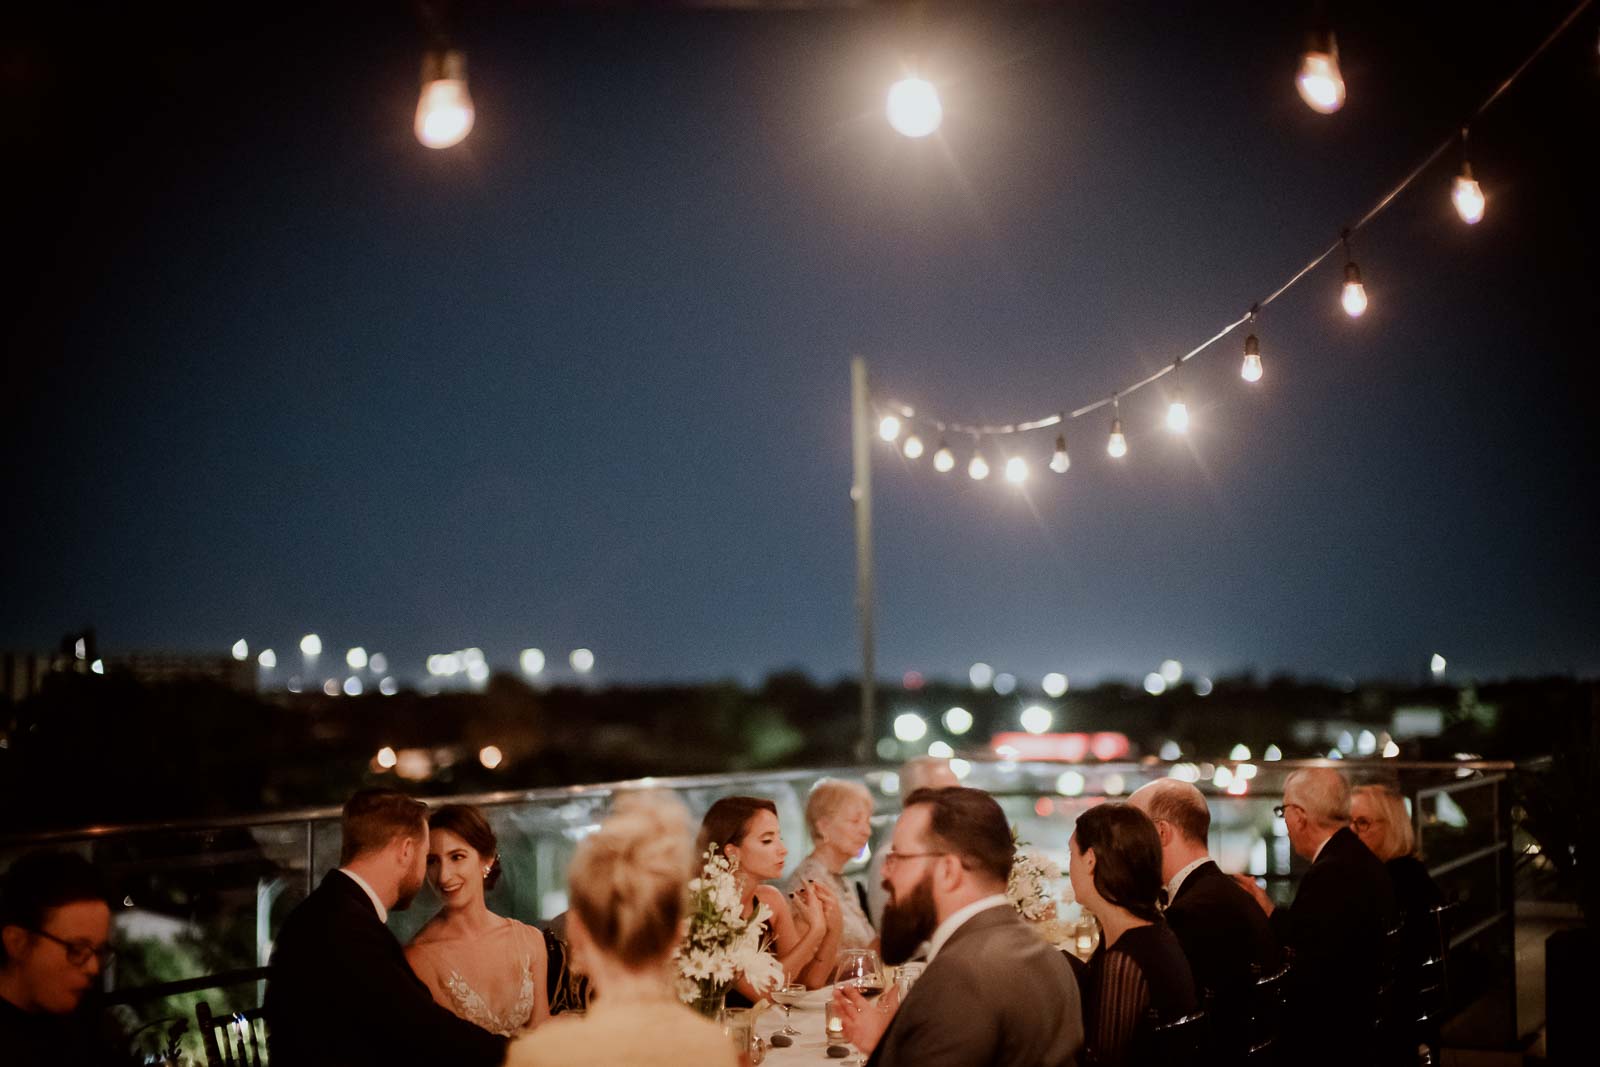 036 The Fairmount Hotel Rooftop Oyster Bar Wedding Reception Leica photographer Philip Thomas Photography